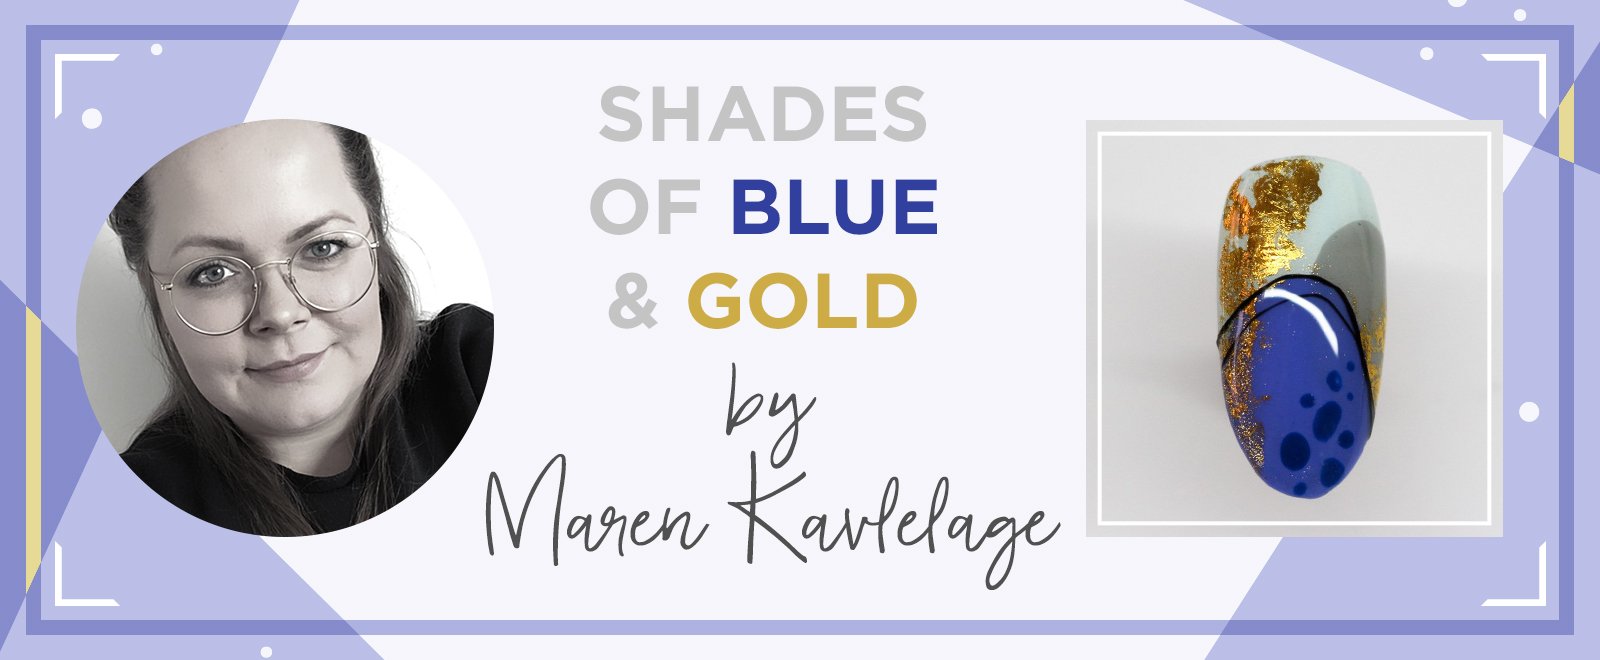 SBS_header_template_1600x660_shades-of-blue-gold_Maren-Kavlelage